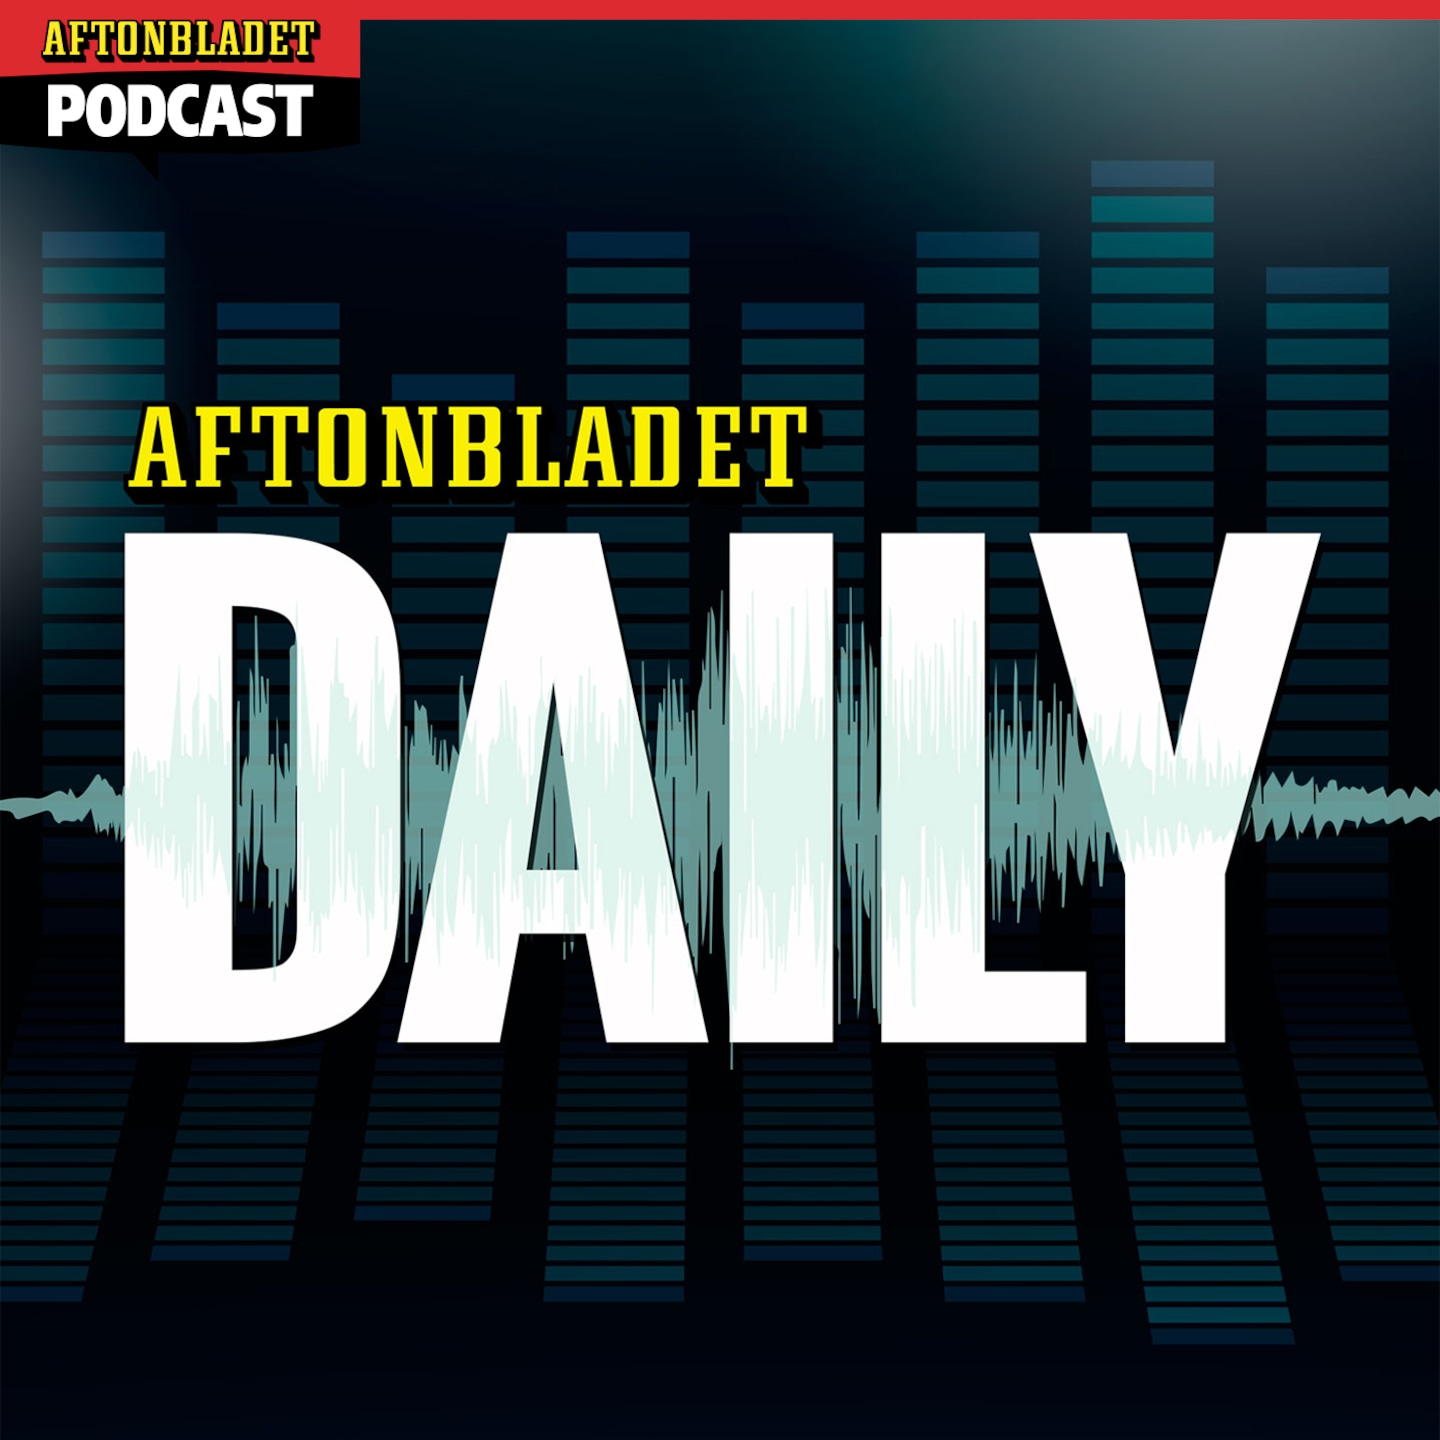 Mass deportation to Rwanda – Aftonbladet podcast